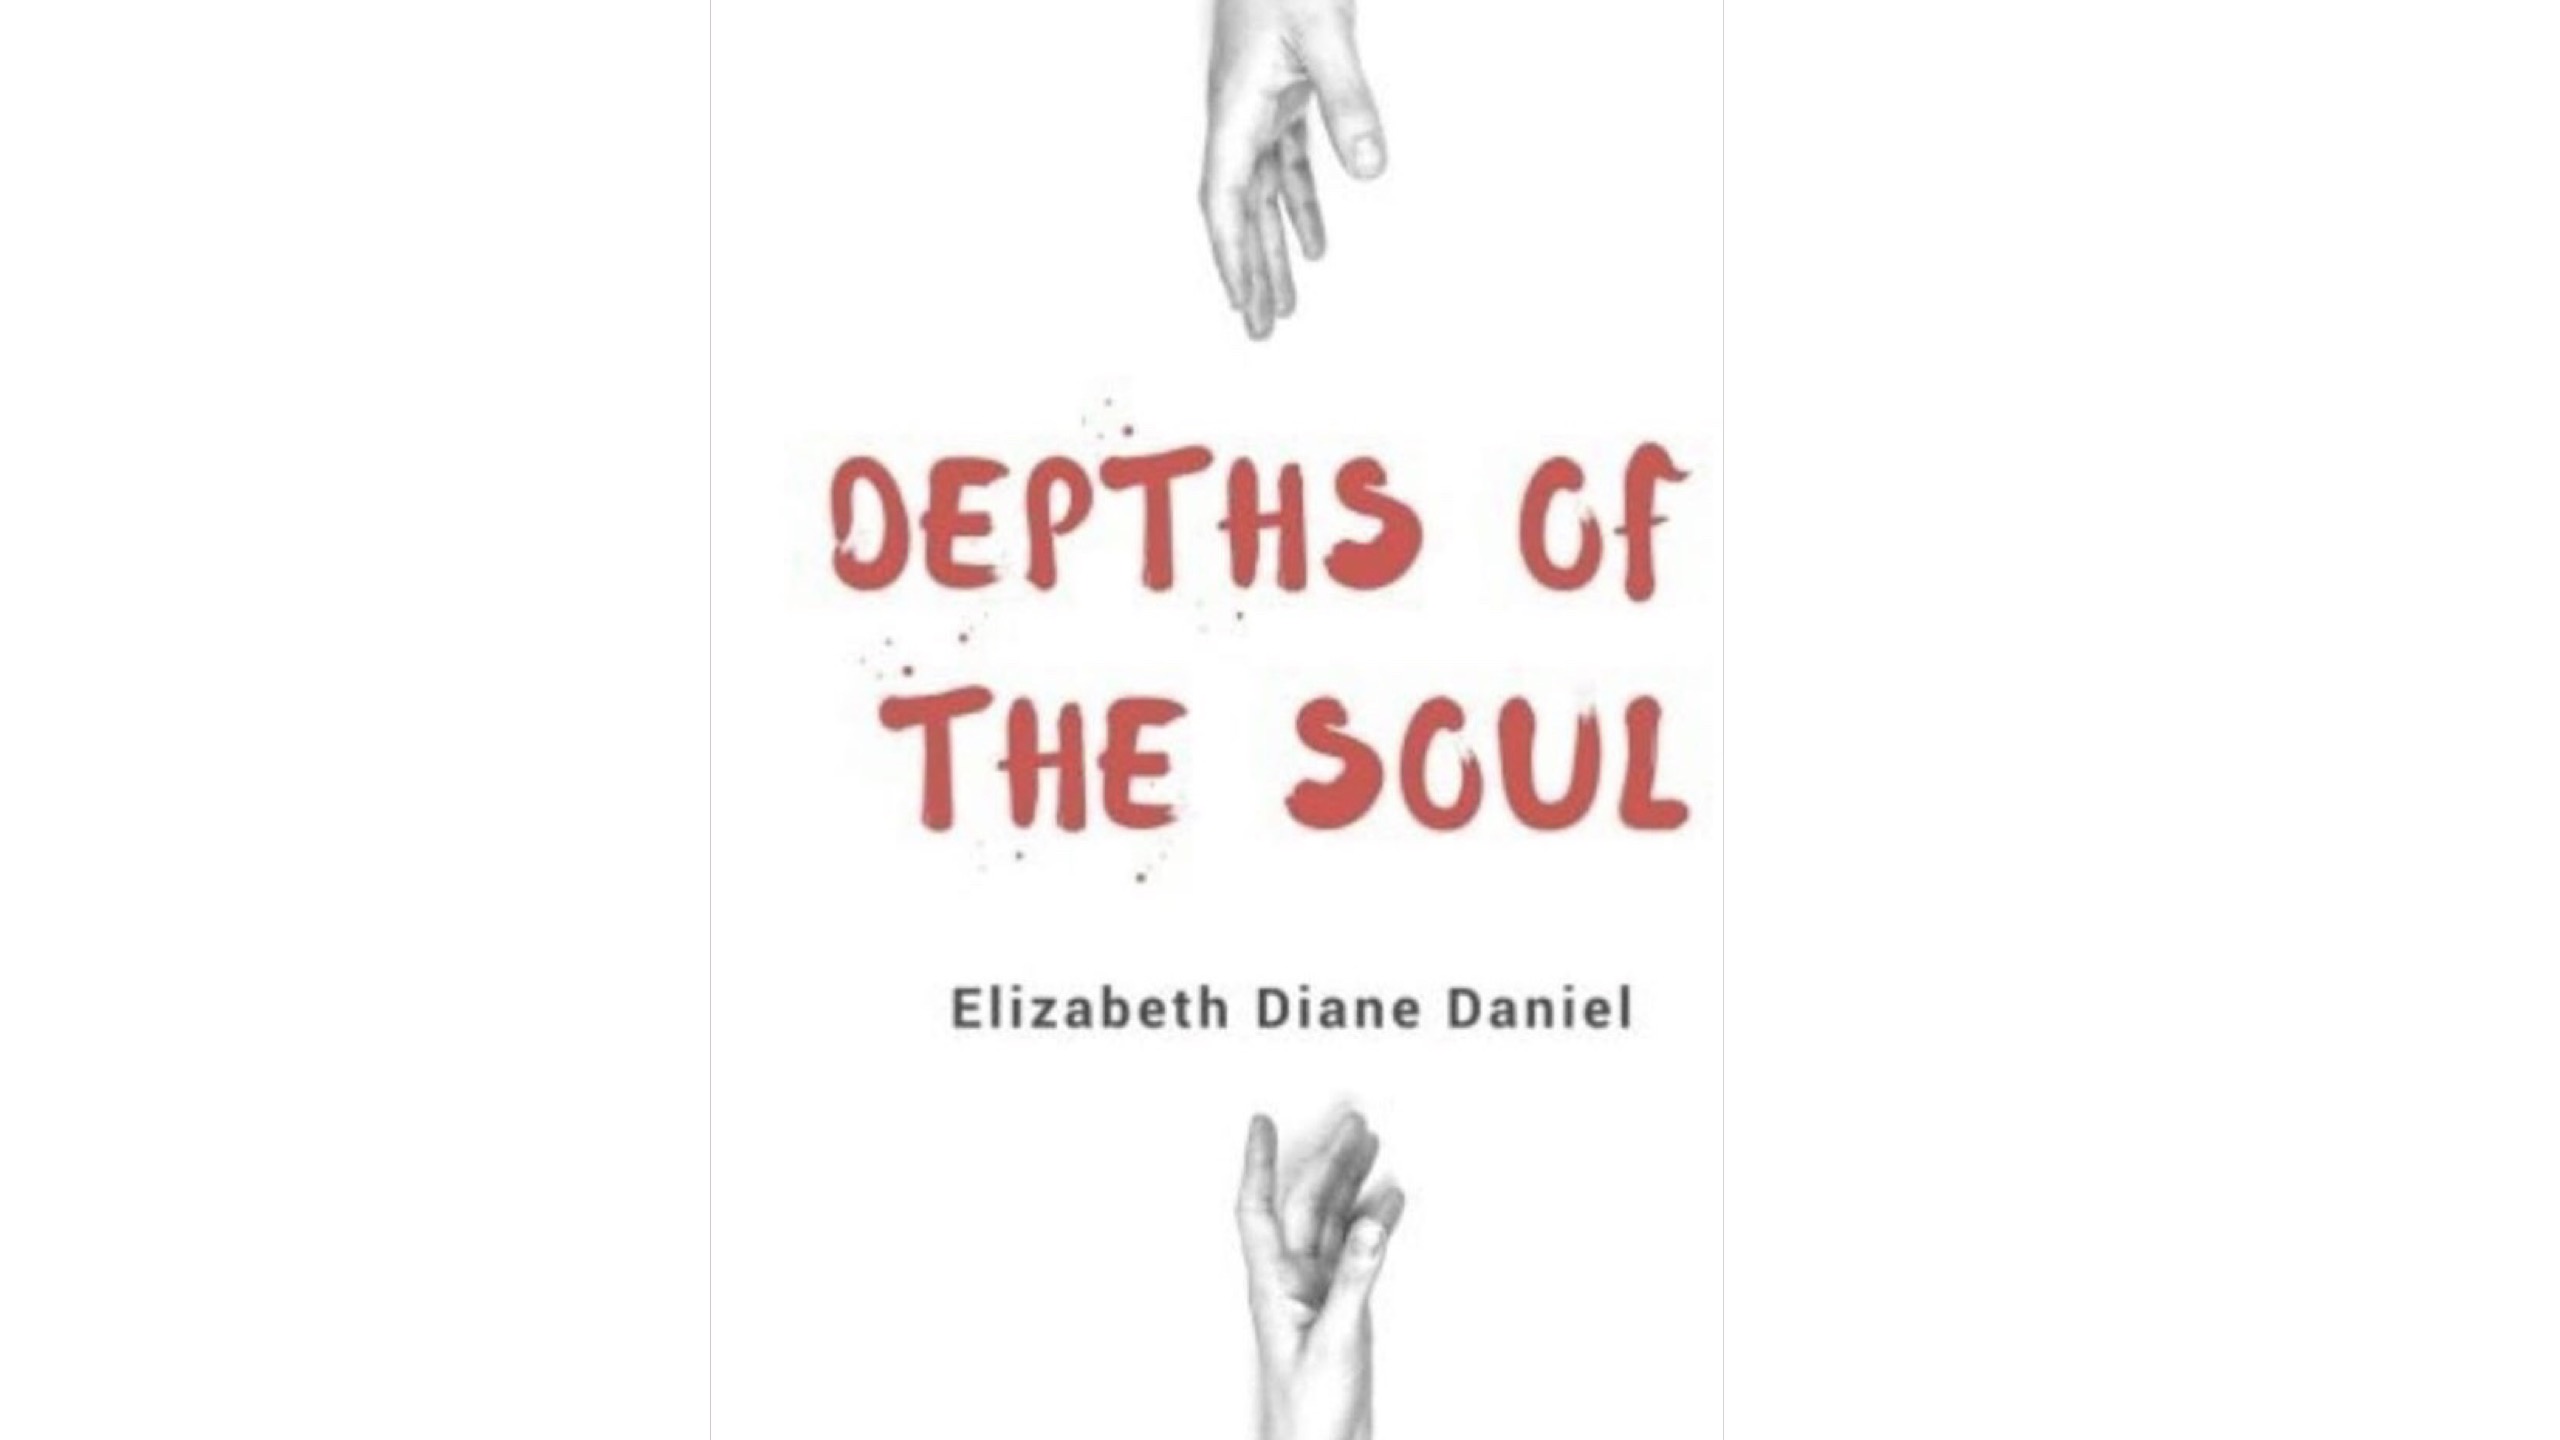 Review: “Depths of the Soul” by Elizabeth Diane Daniel